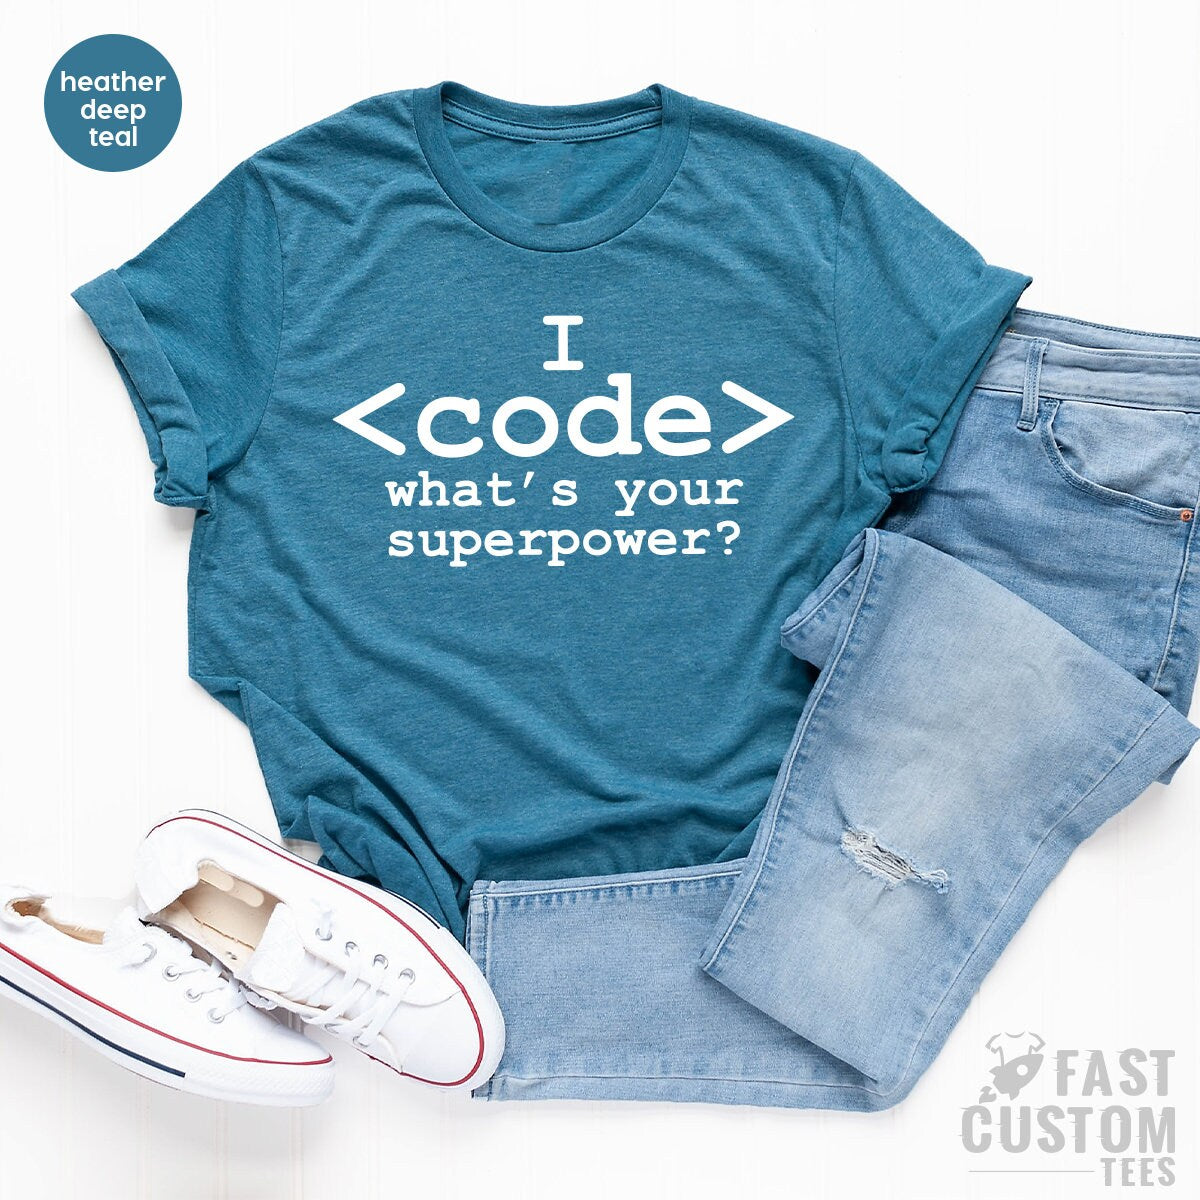 Coder Shirt, Programmers TShirt, Coding T Shirt, Gift For Coder, Computer Science Gift, Coding Humor Tee, Programming Shirt, Coder Nerd Tee - Fastdeliverytees.com